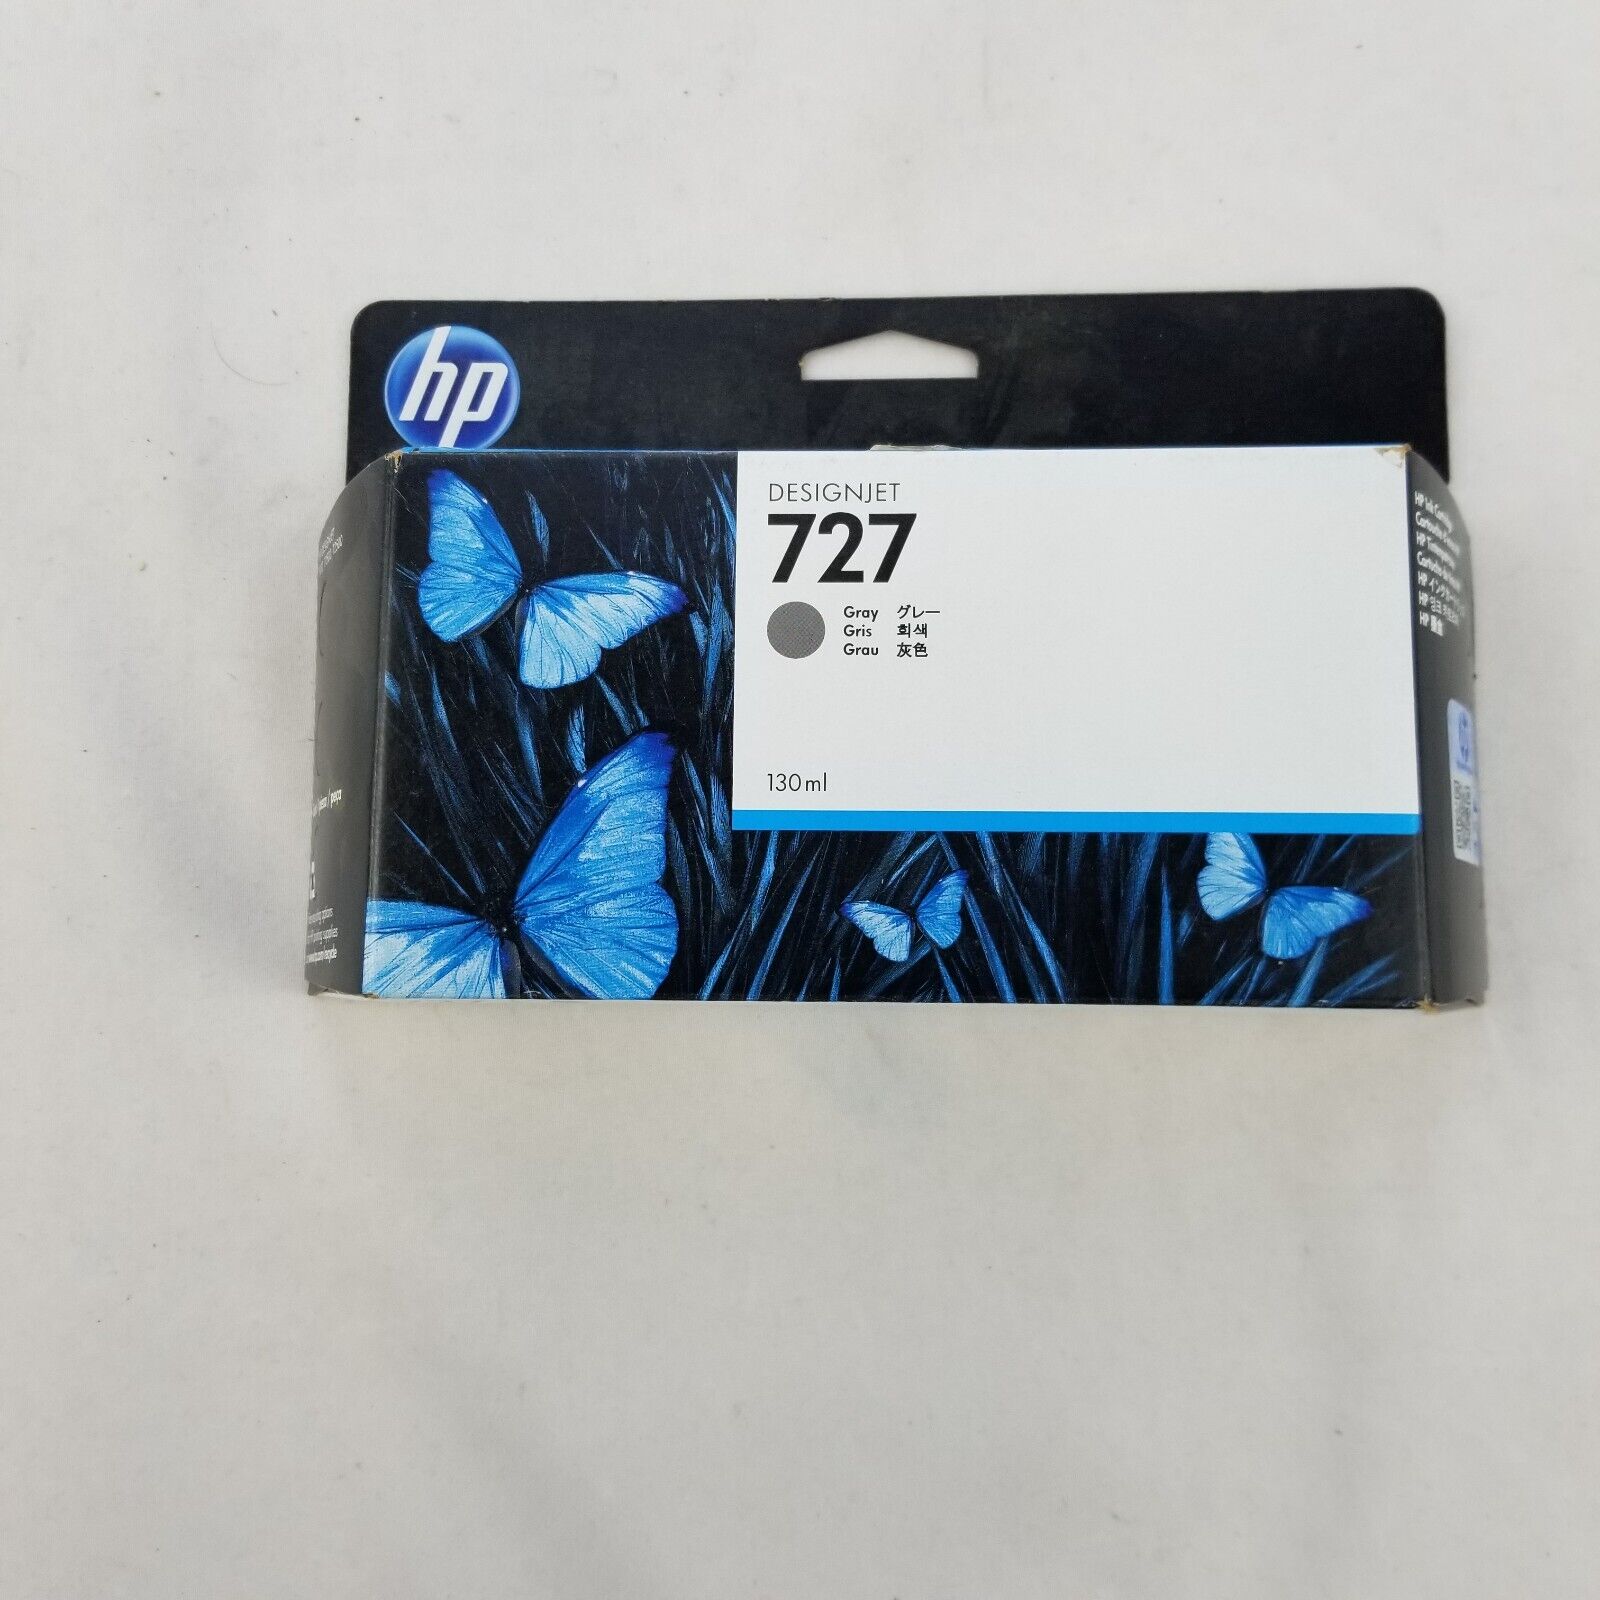 Genuine HP 727 Gray Ink Cartridge B3P22A 130ml DesignJet New Sealed Expired